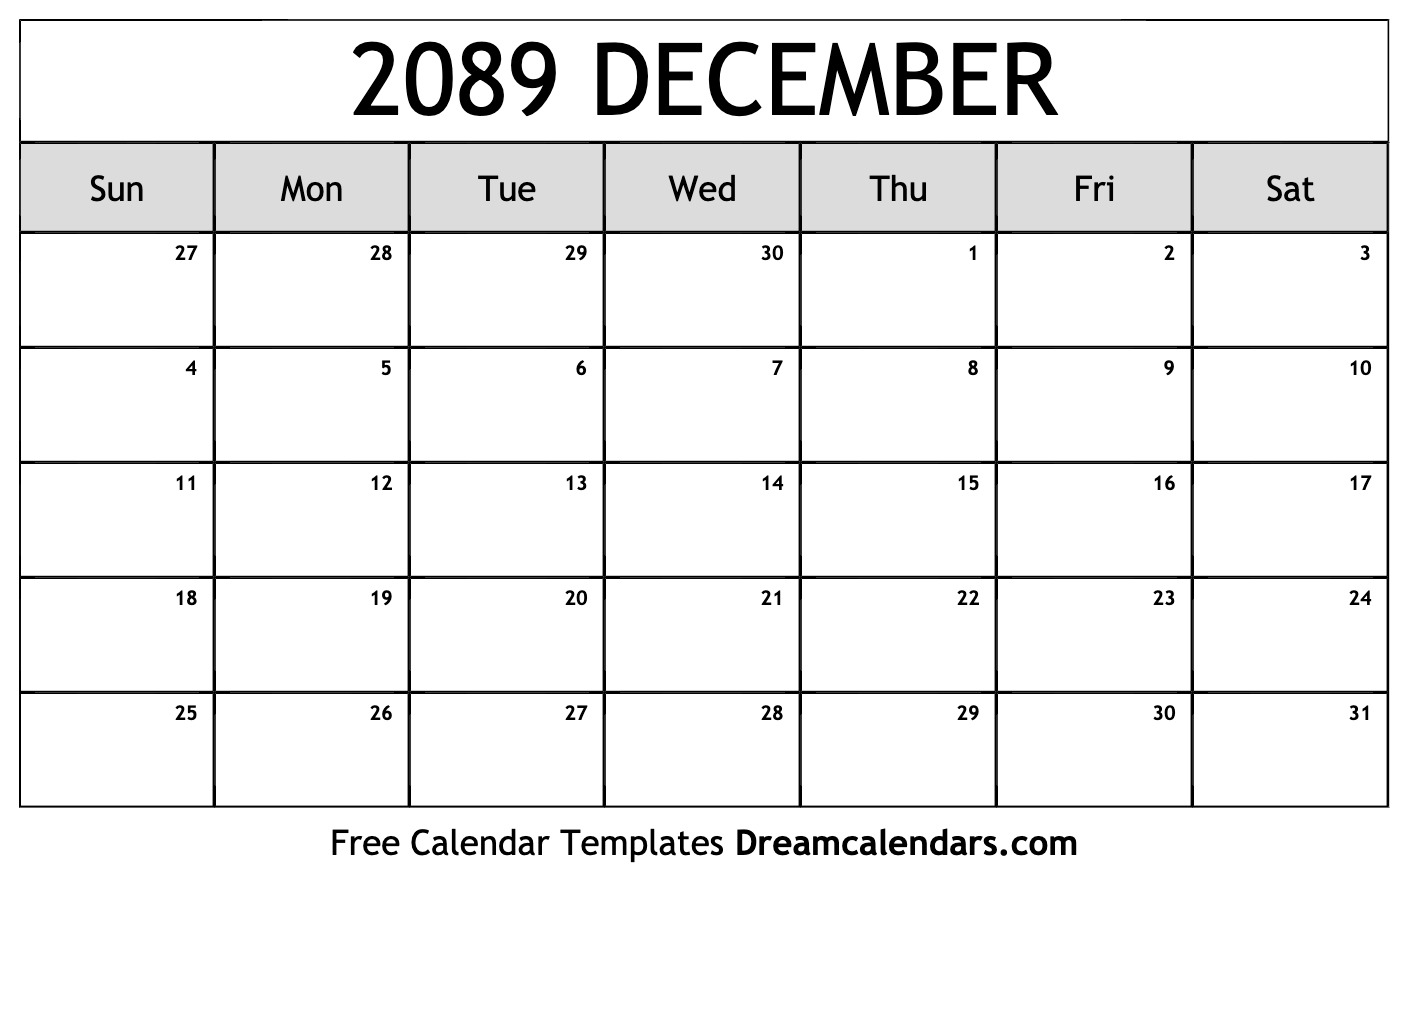 december-2089-calendar-free-blank-printable-with-holidays